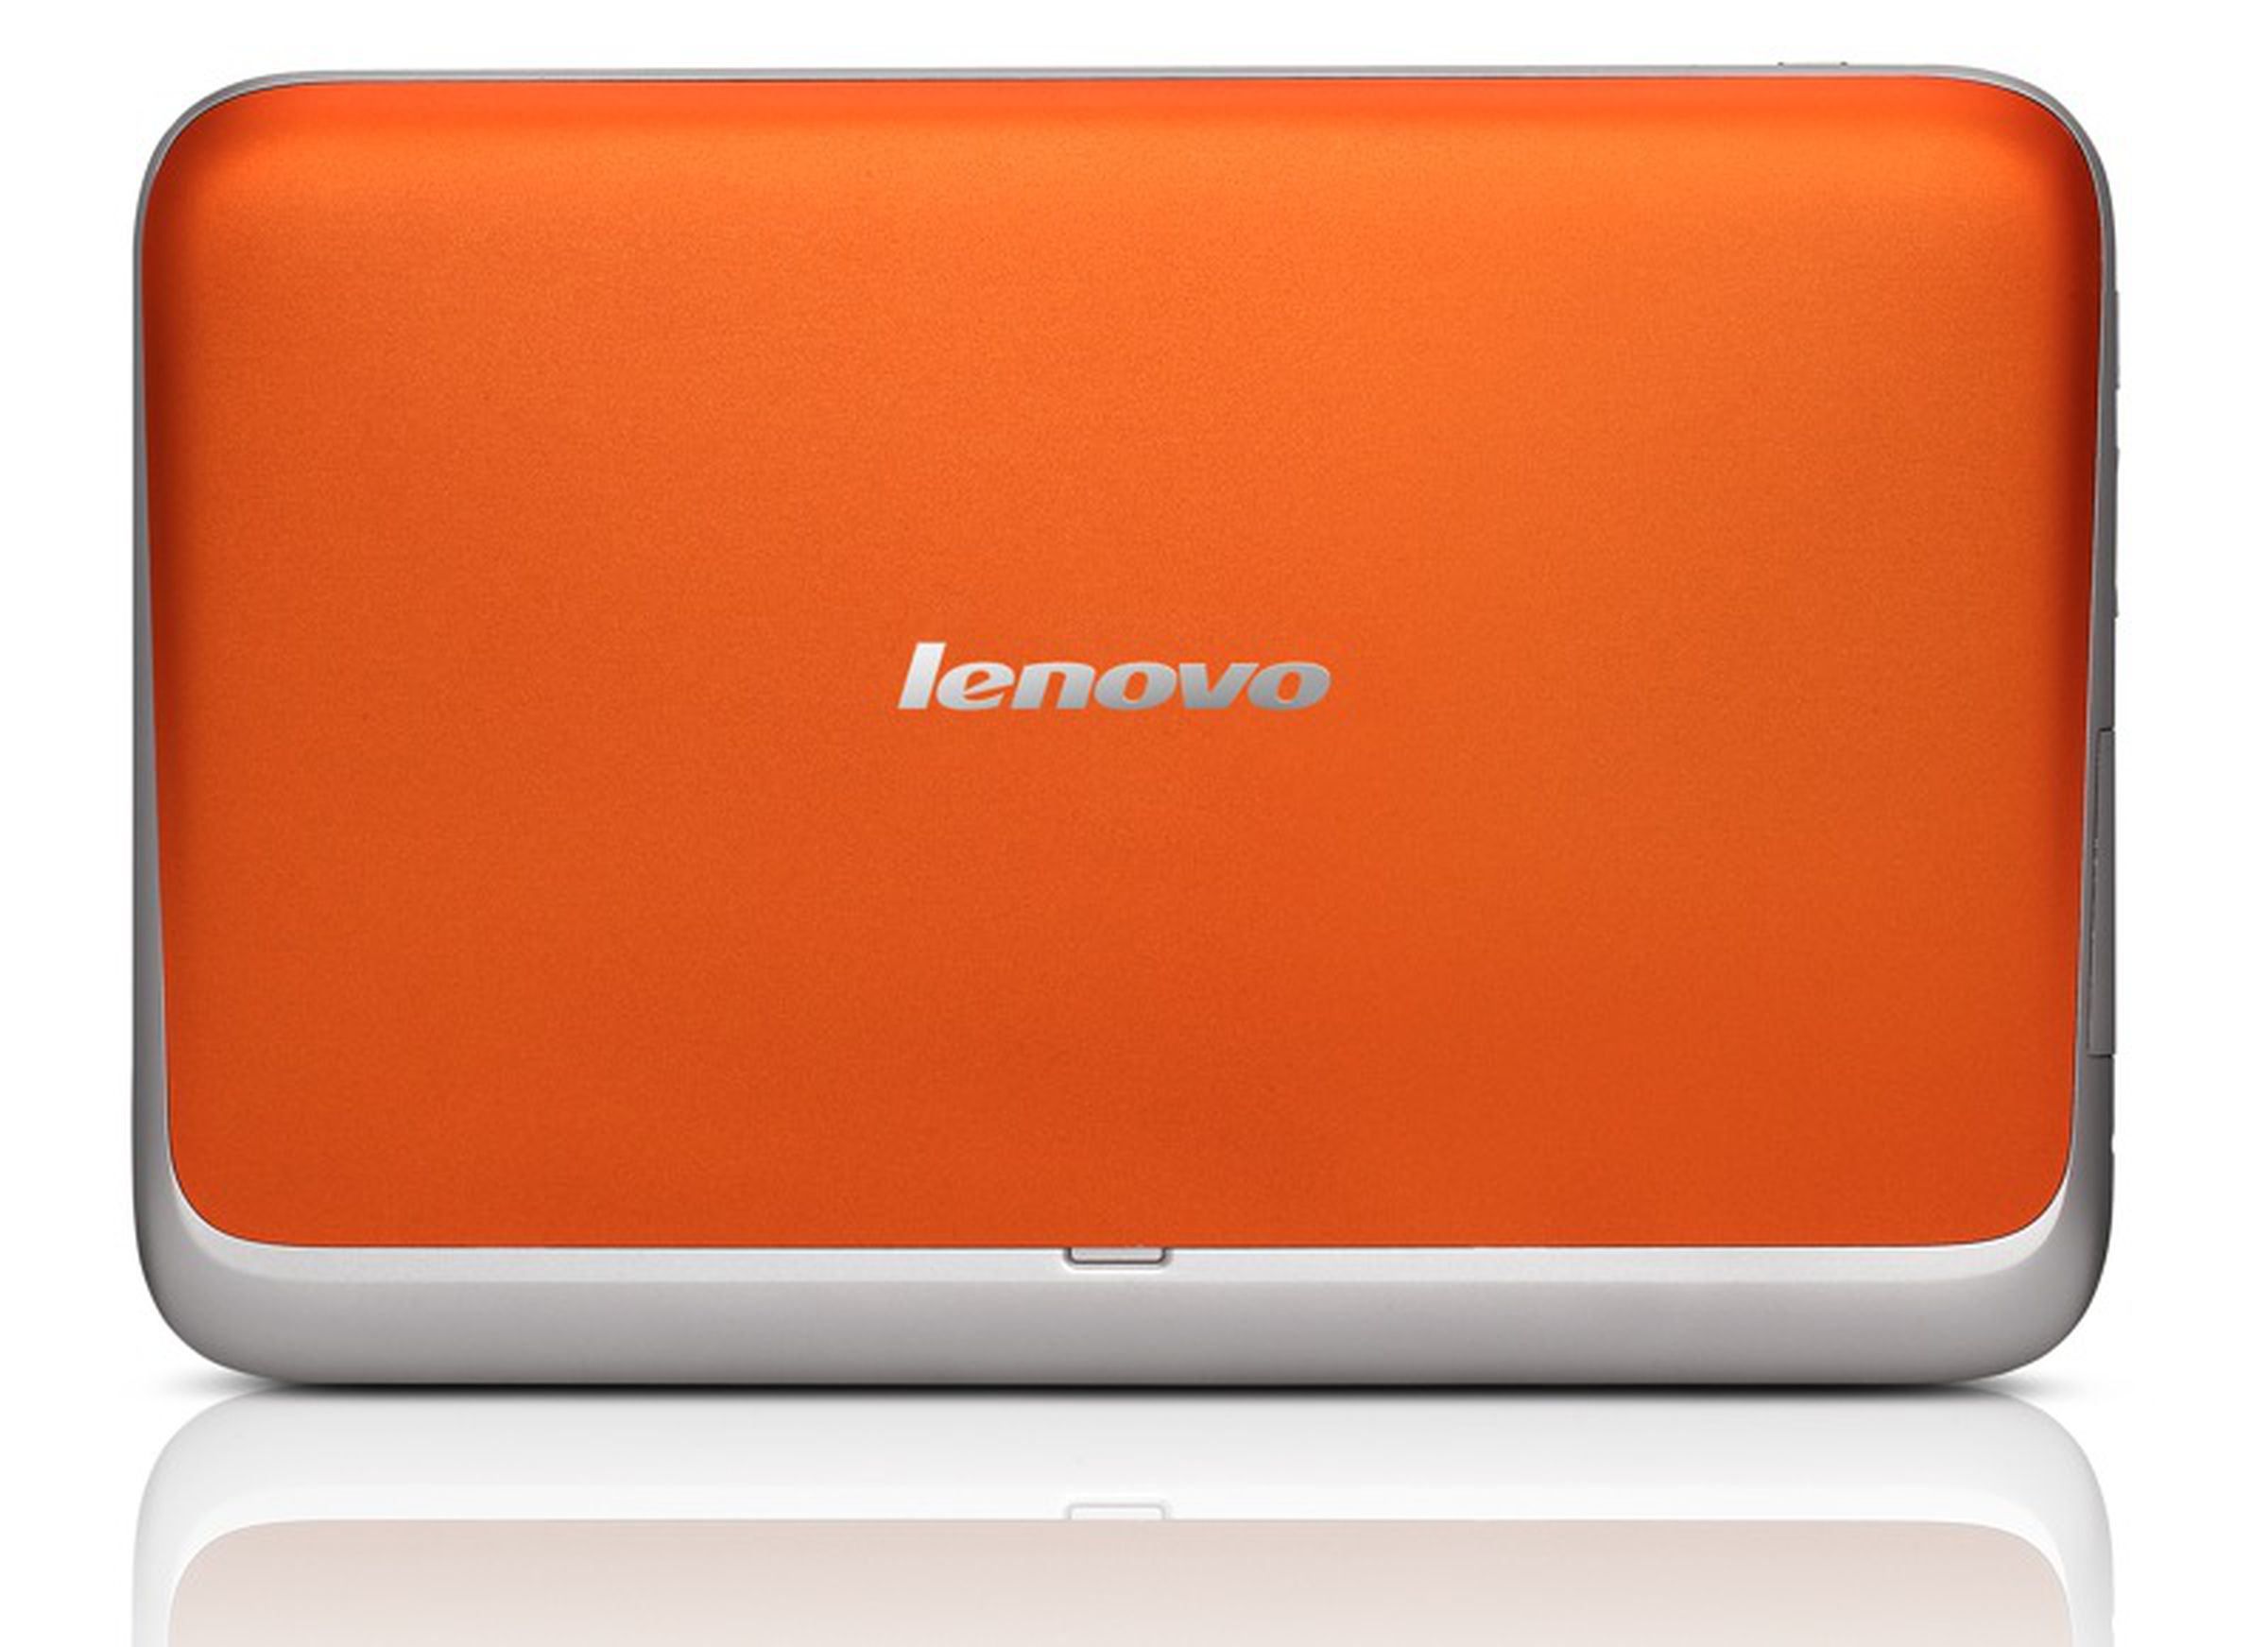 Lenovo announces IdeaPad P1